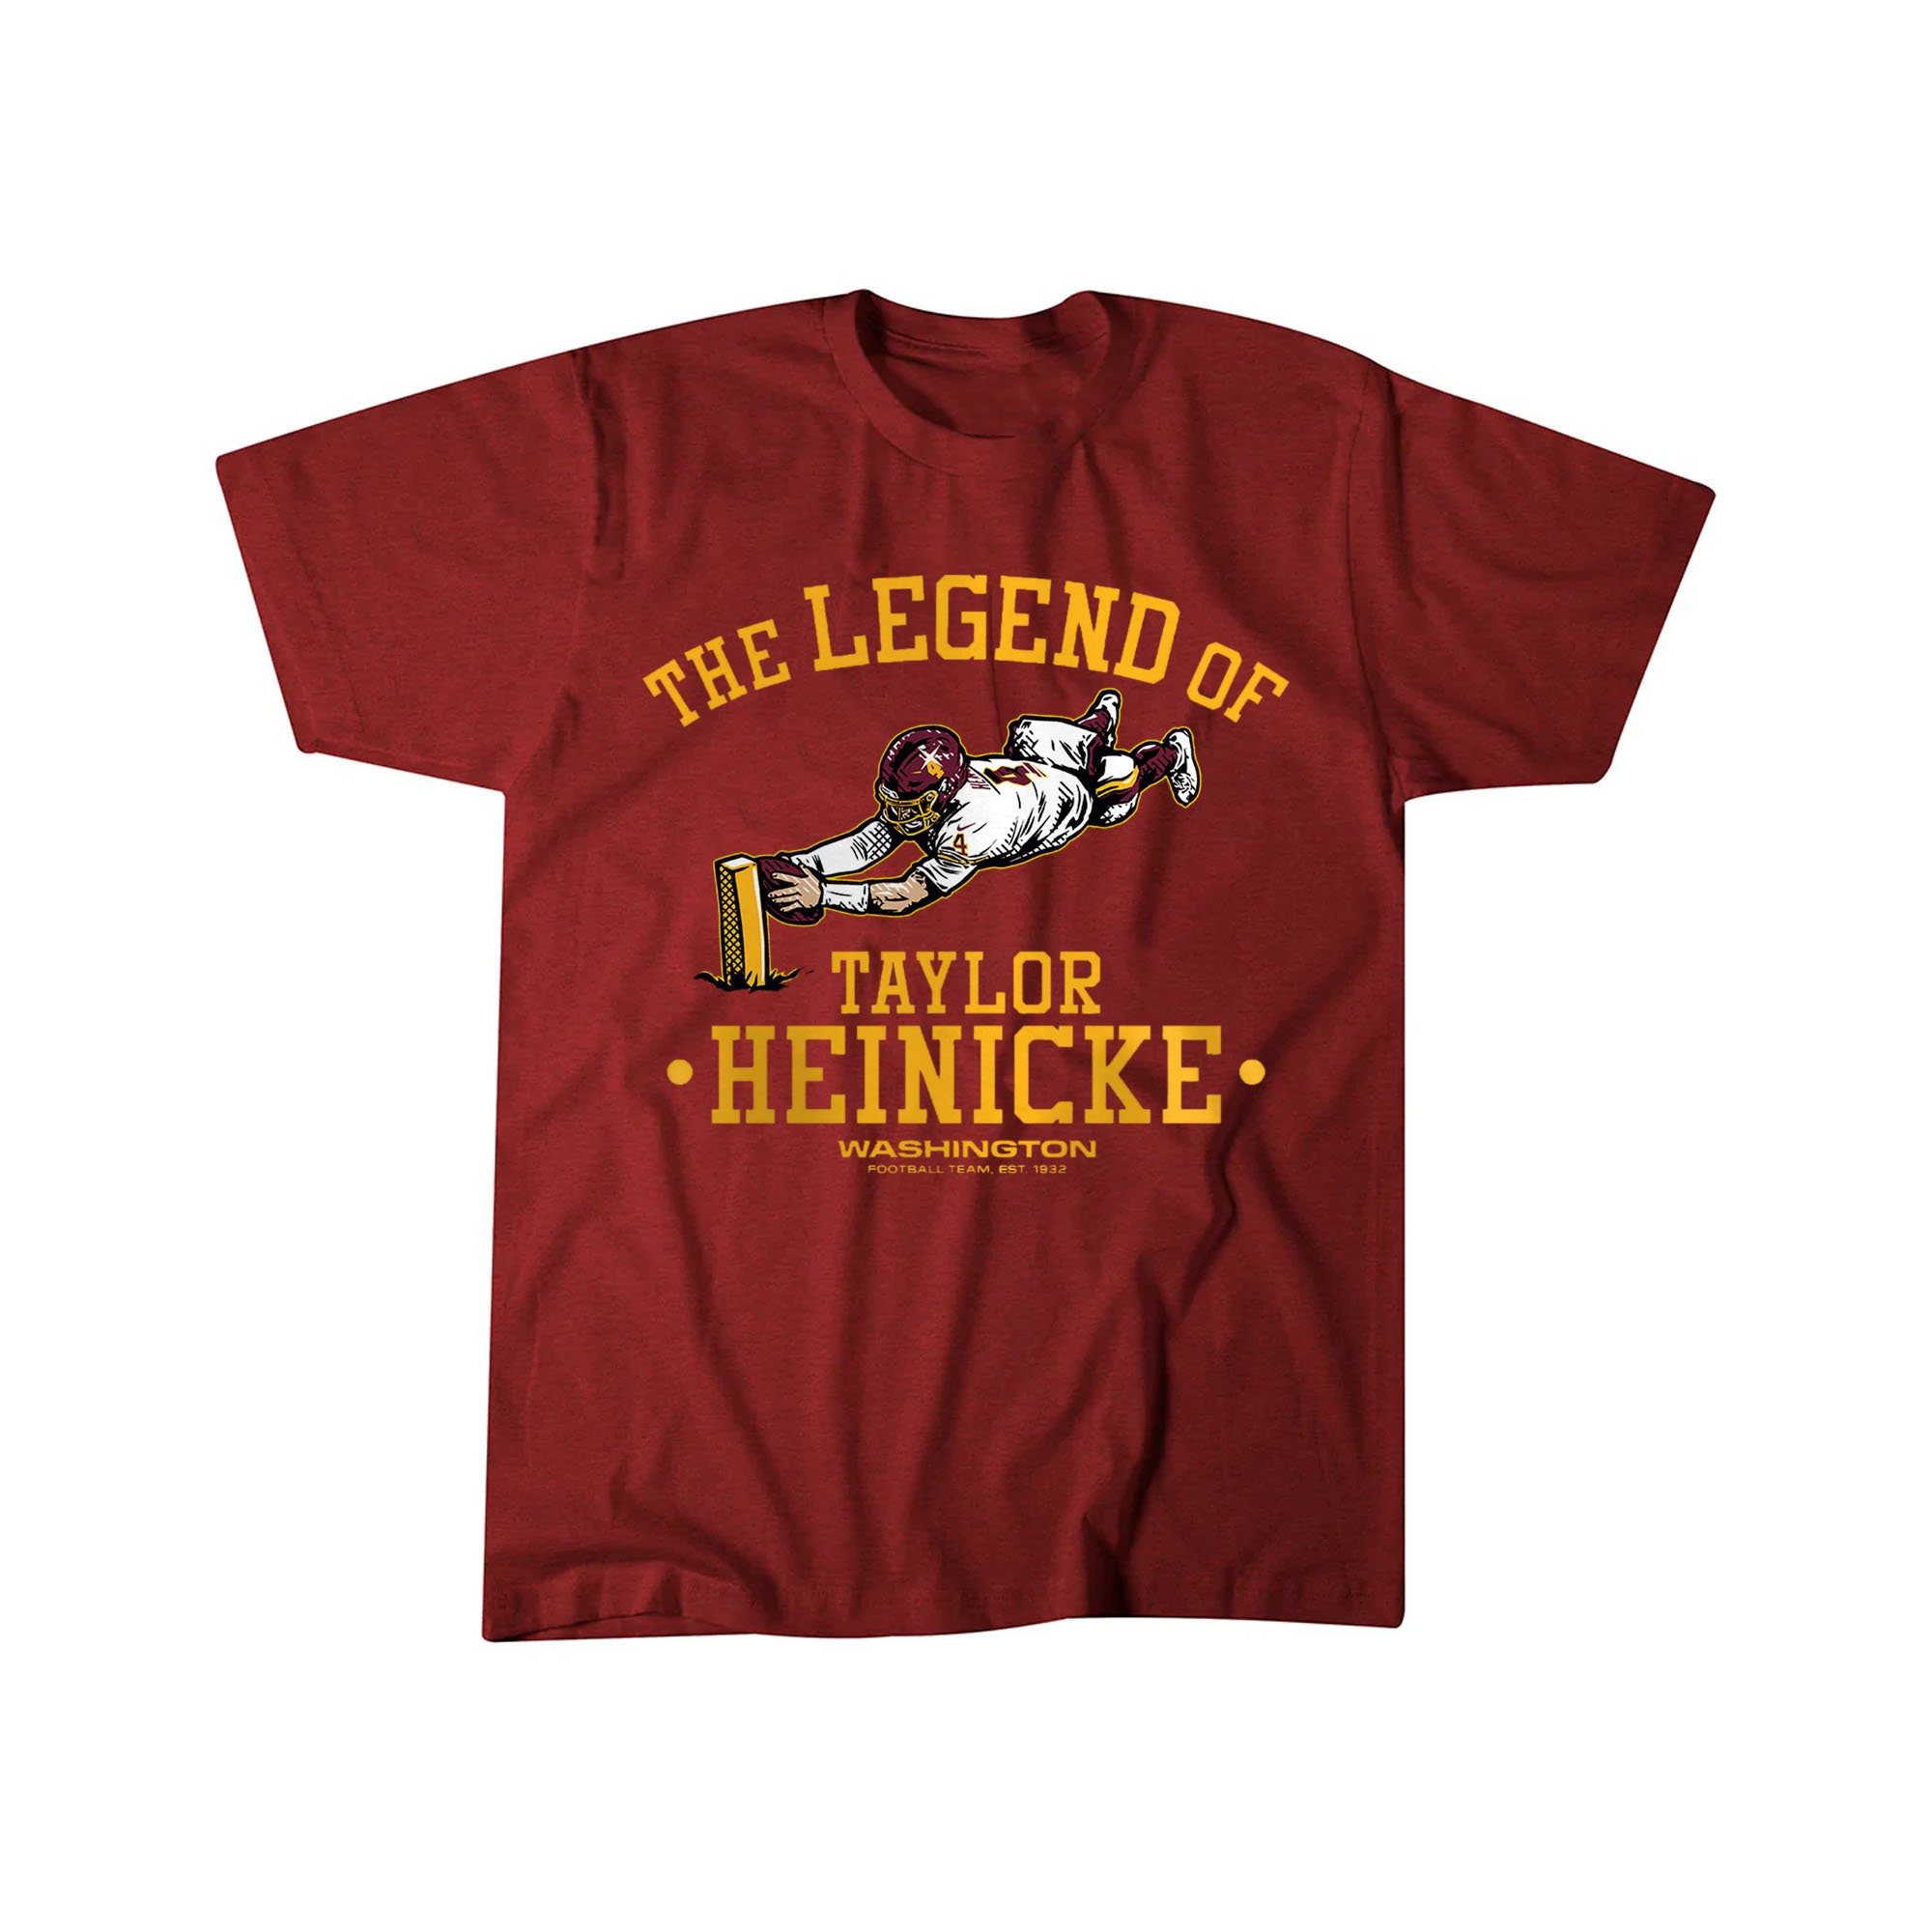 Taylor Heinicke Shirt, The Legend of Taylor Heinicke T-Shirt